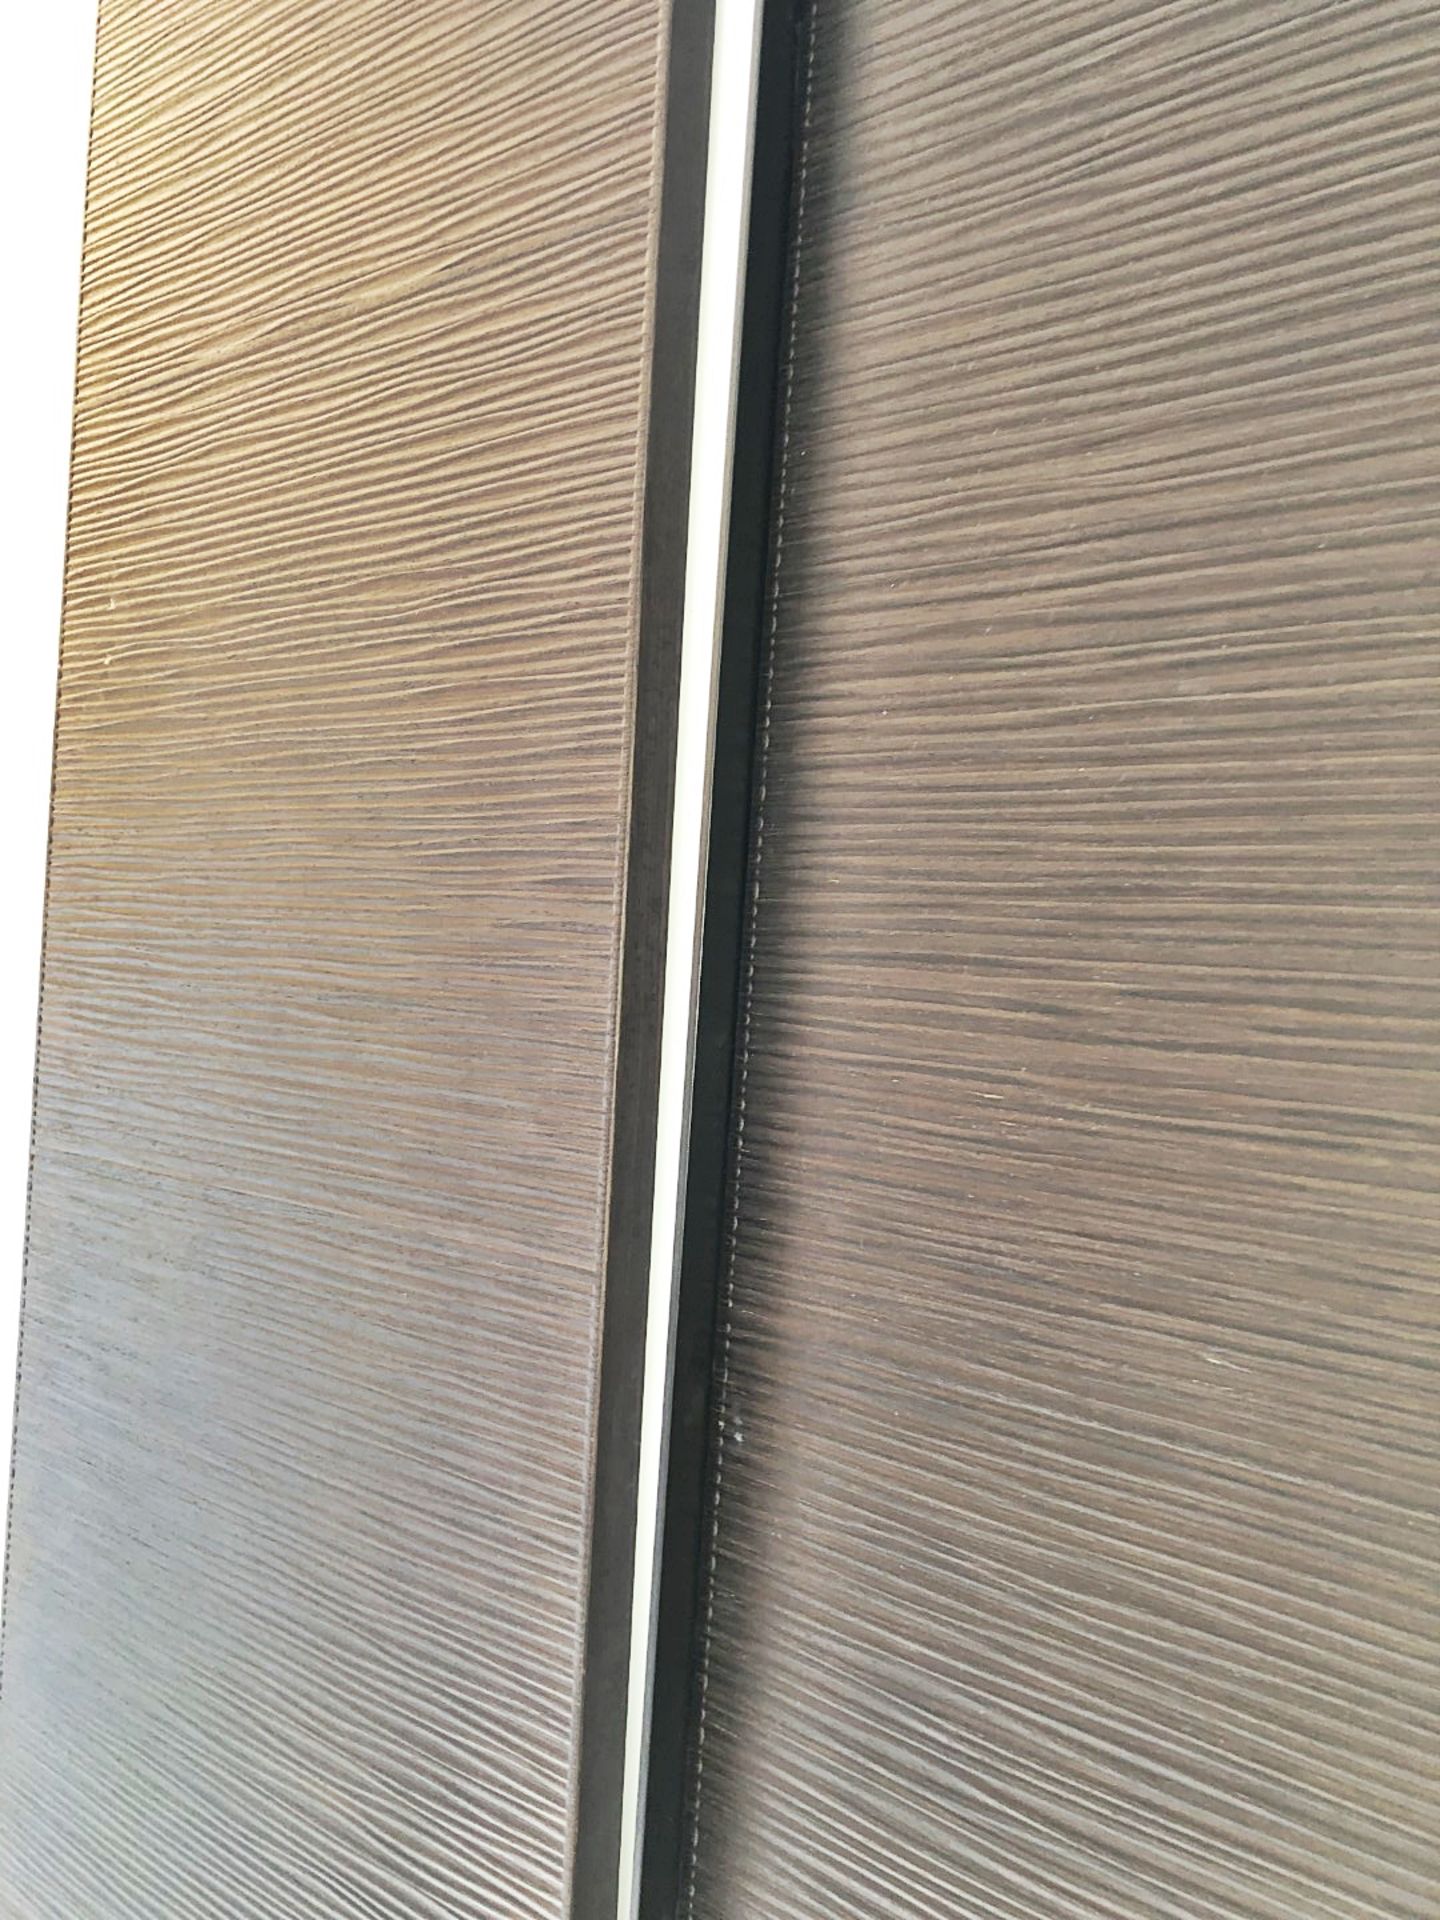 A Pair Of Premium Wooden Veneered Wardrobe Doors - CL380 - Location: Altrincham WA14 - NO VAT - Image 5 of 5